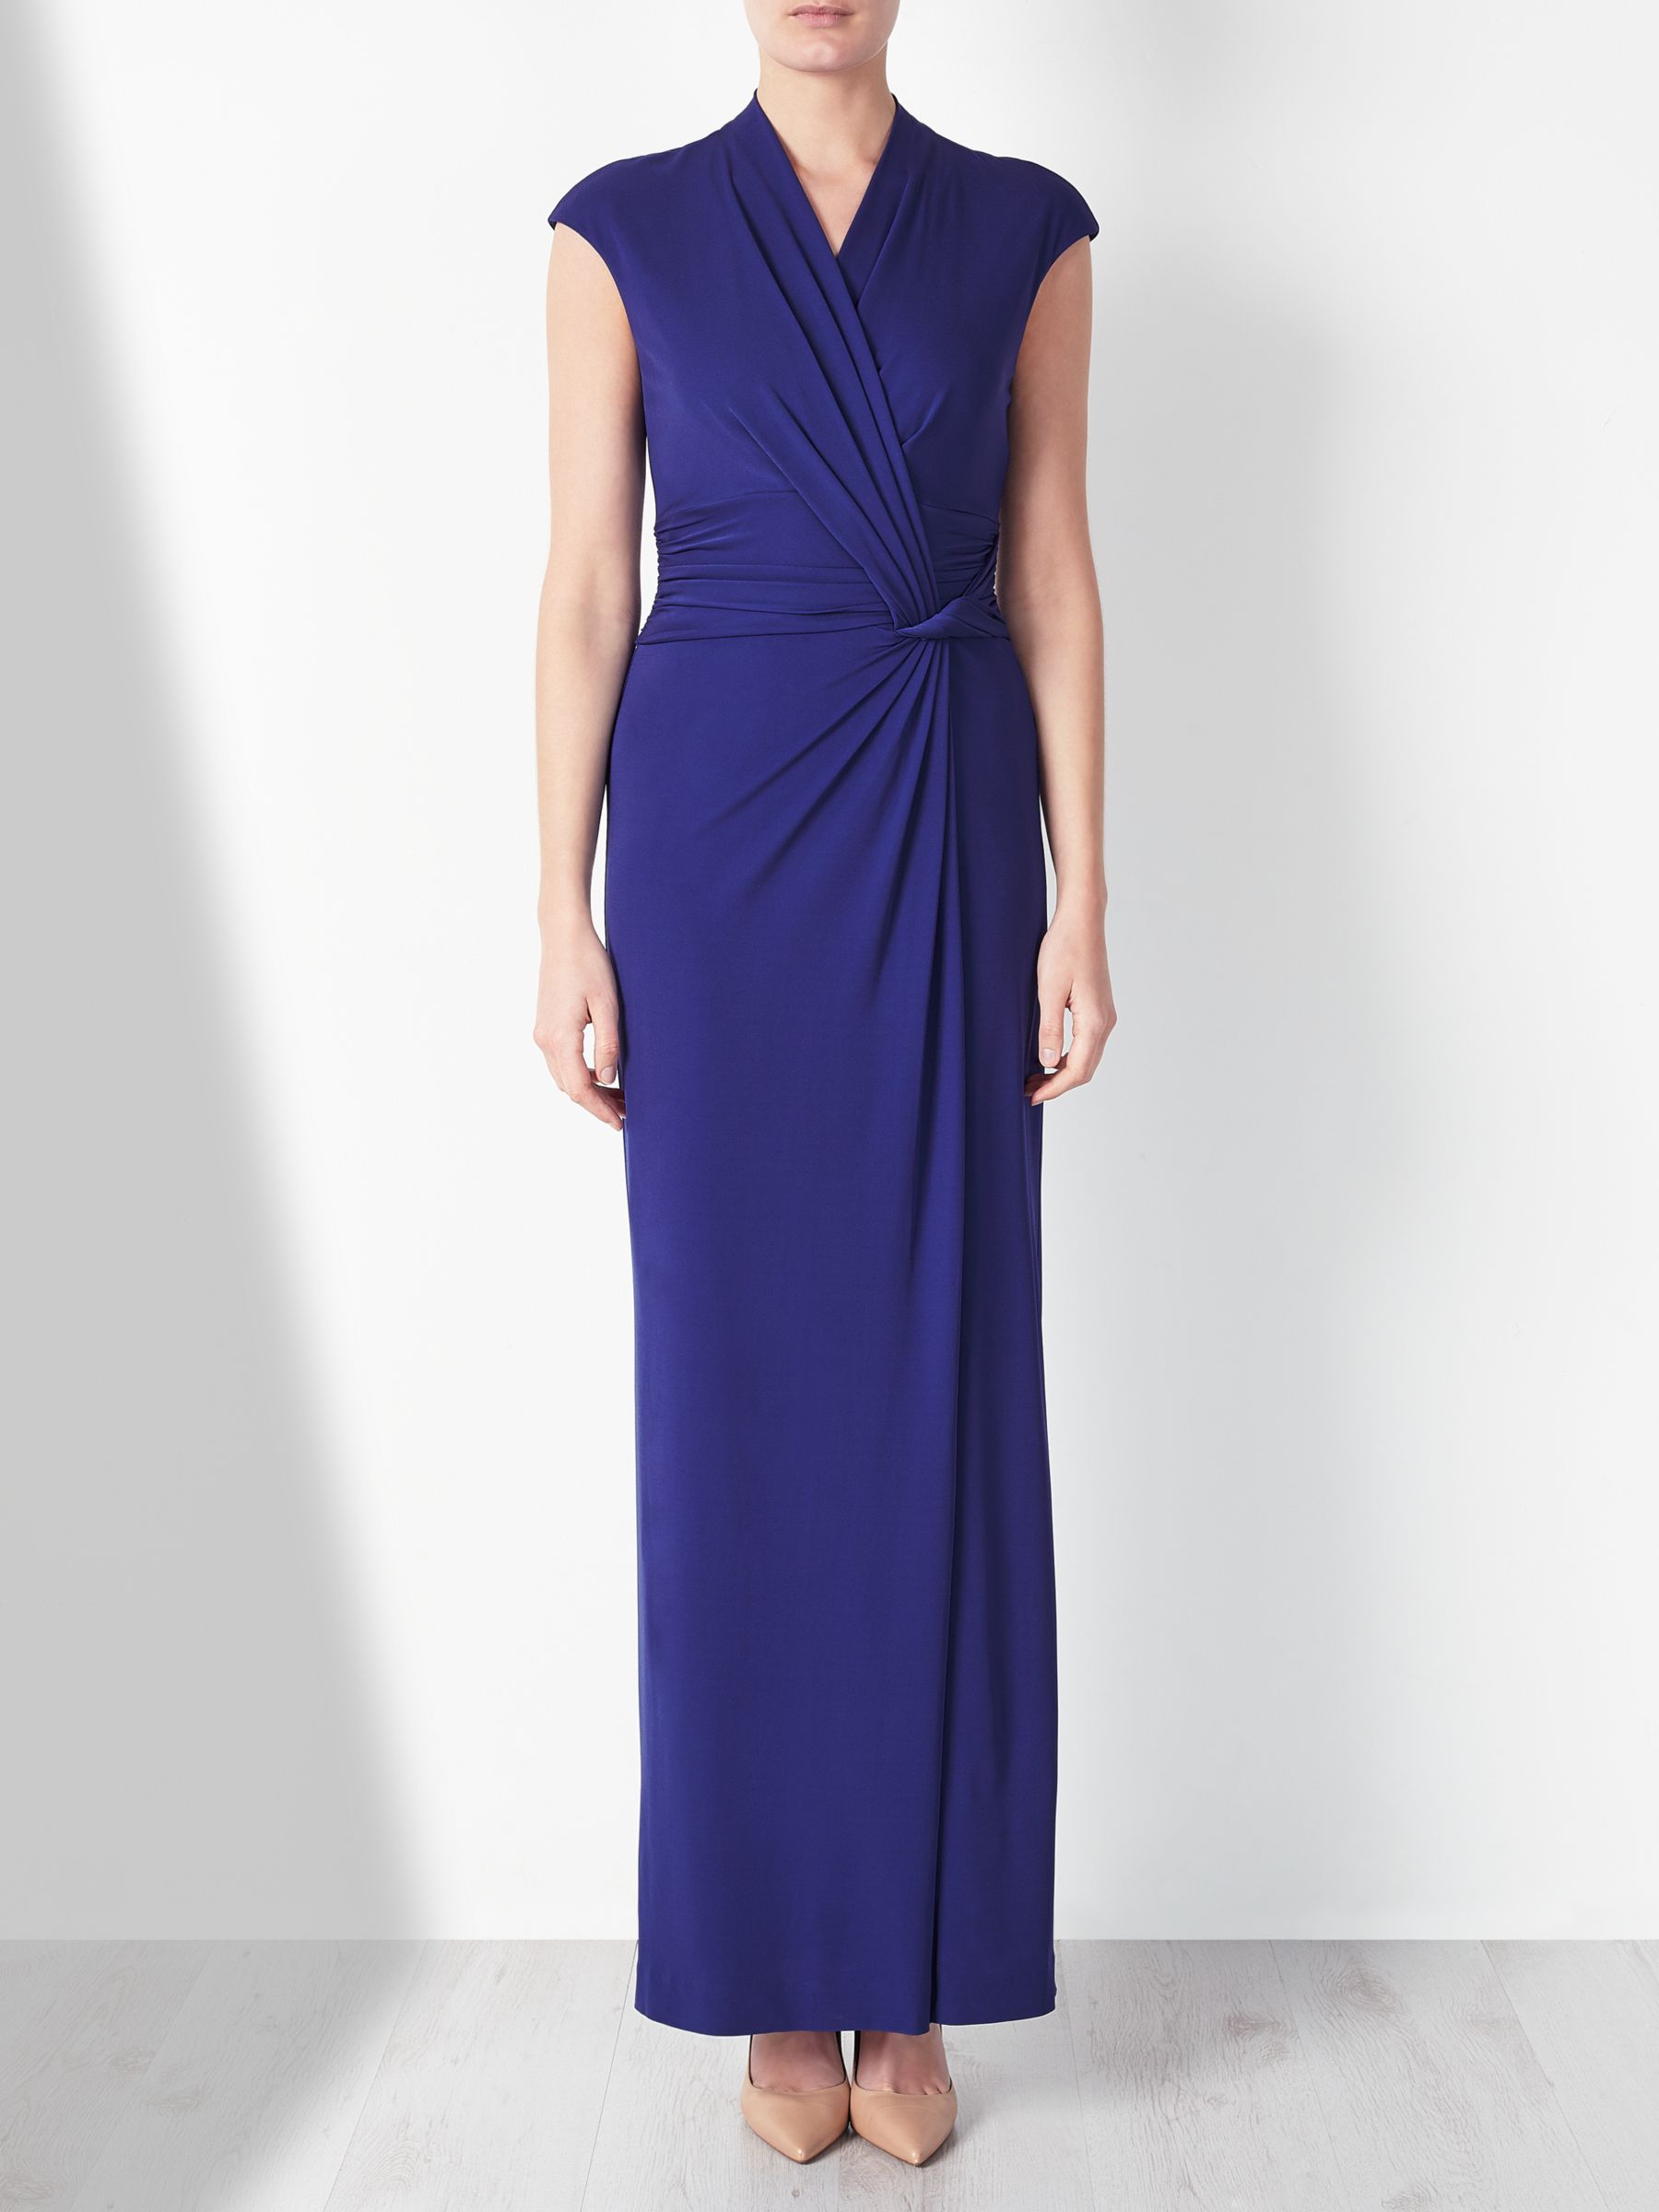 John Lewis & Partners Draped Twist Waist Dress, Blue, 14